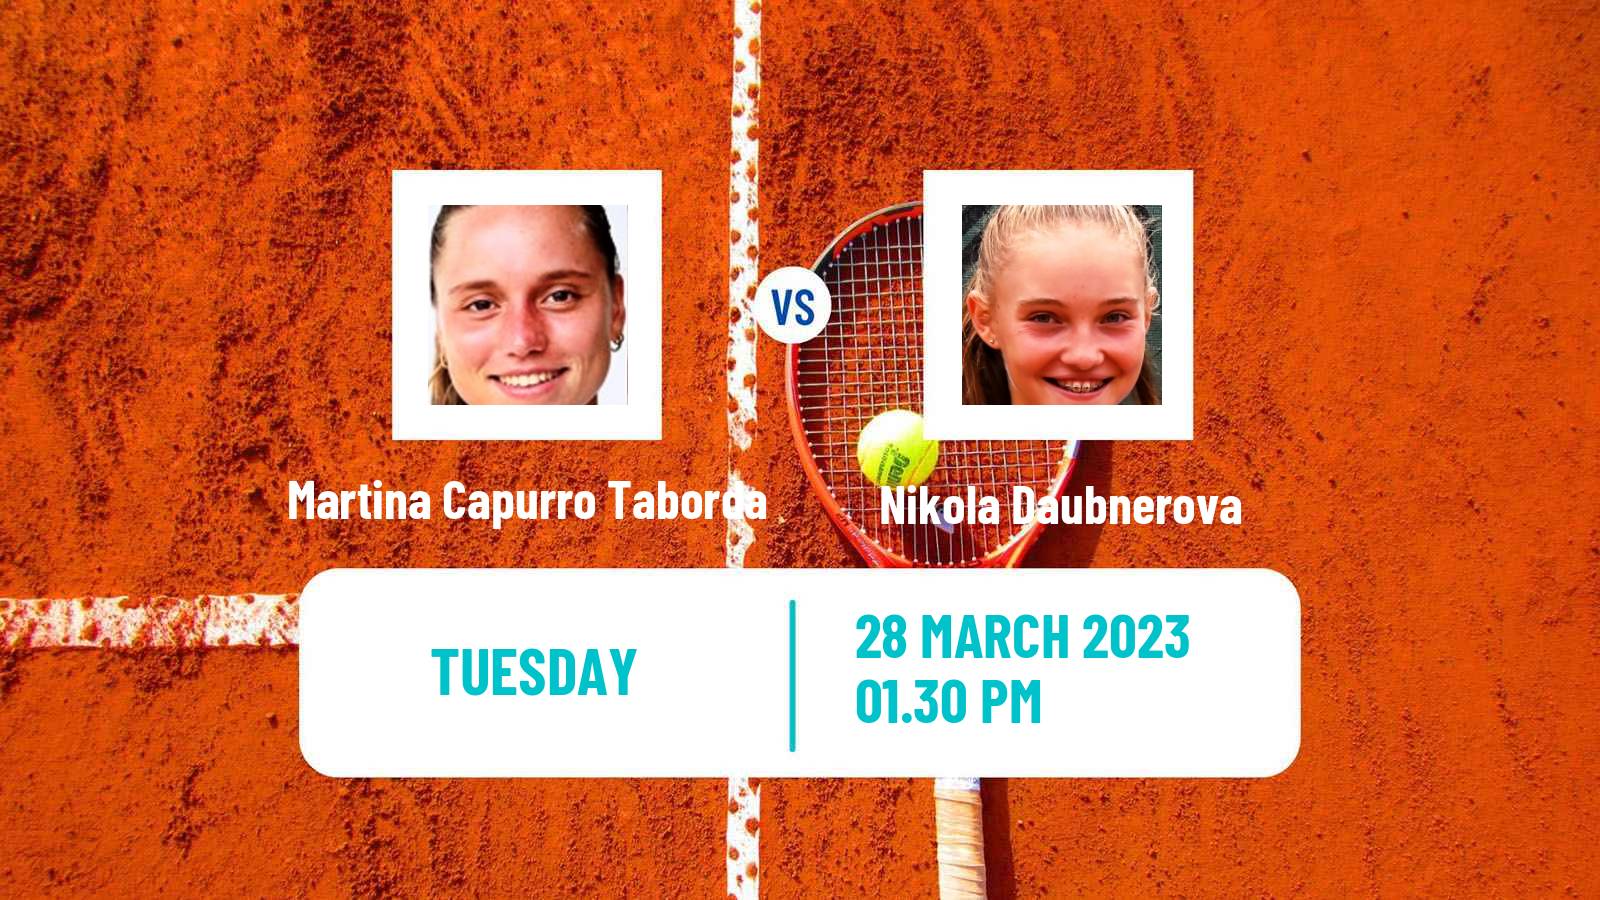 Tennis ITF Tournaments Martina Capurro Taborda - Nikola Daubnerova